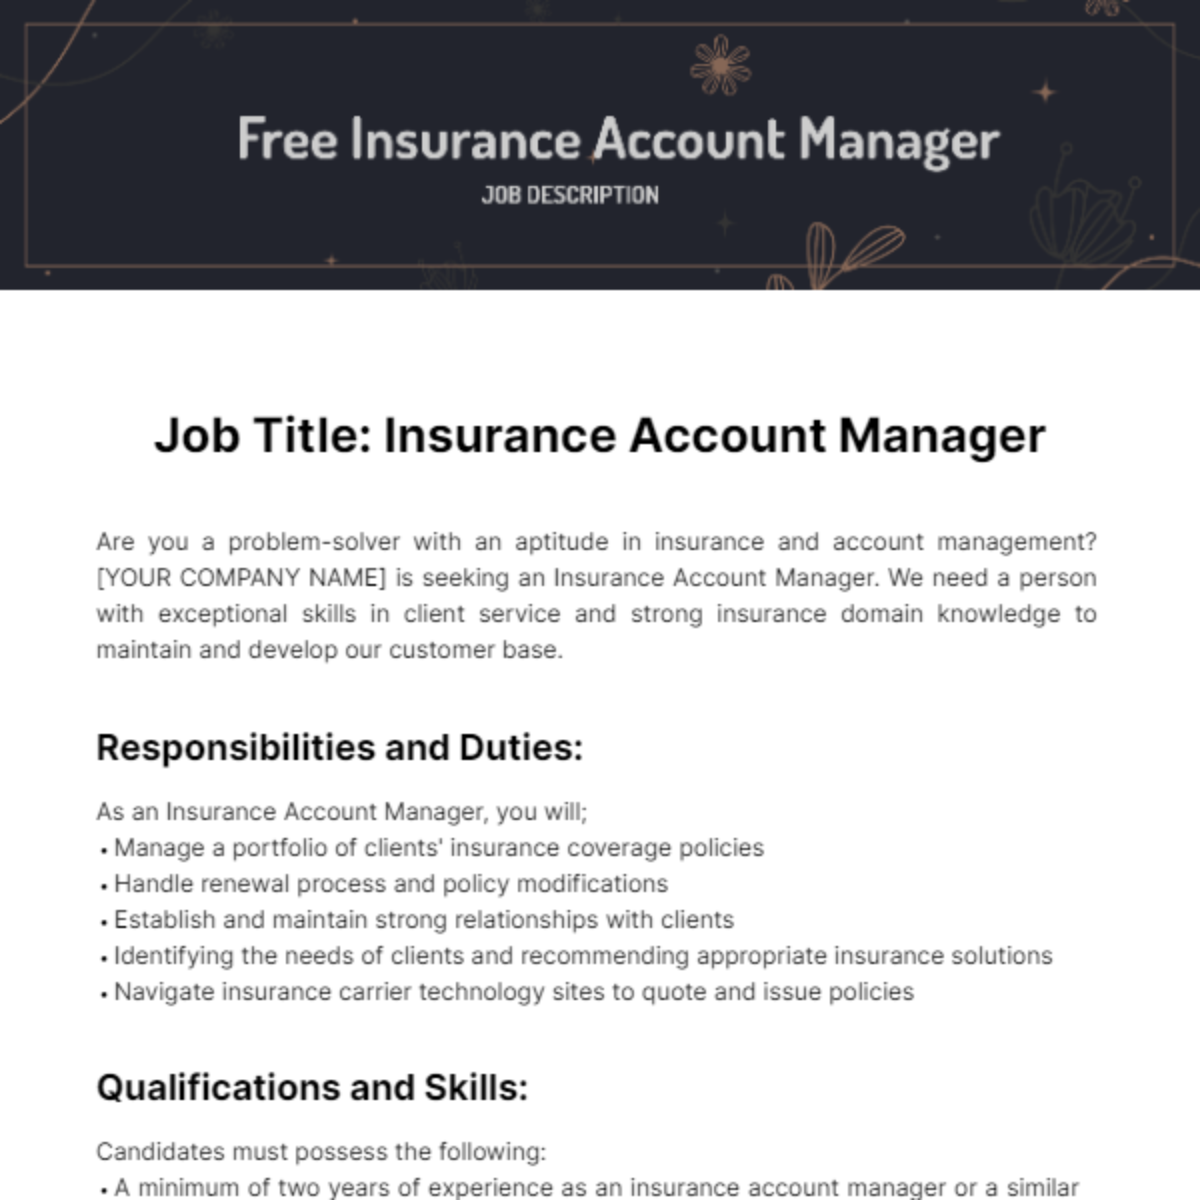 Free Insurance Account Manager Job Description Template